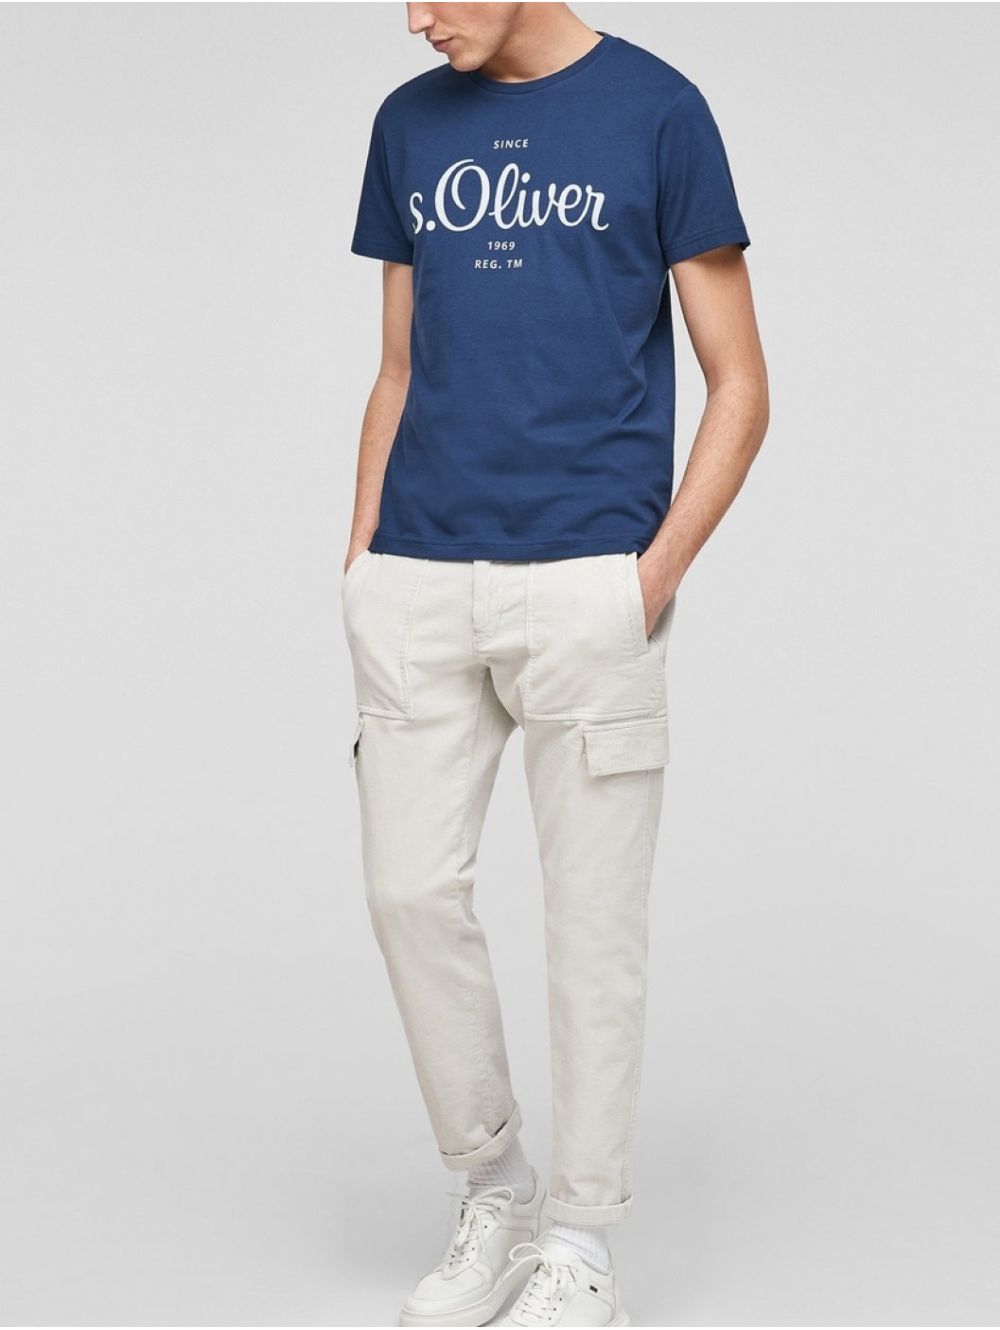 S.OLIVER Men\'s blue short-sleeved jersey T-Shirt 2057432-5693 Ocean Blue